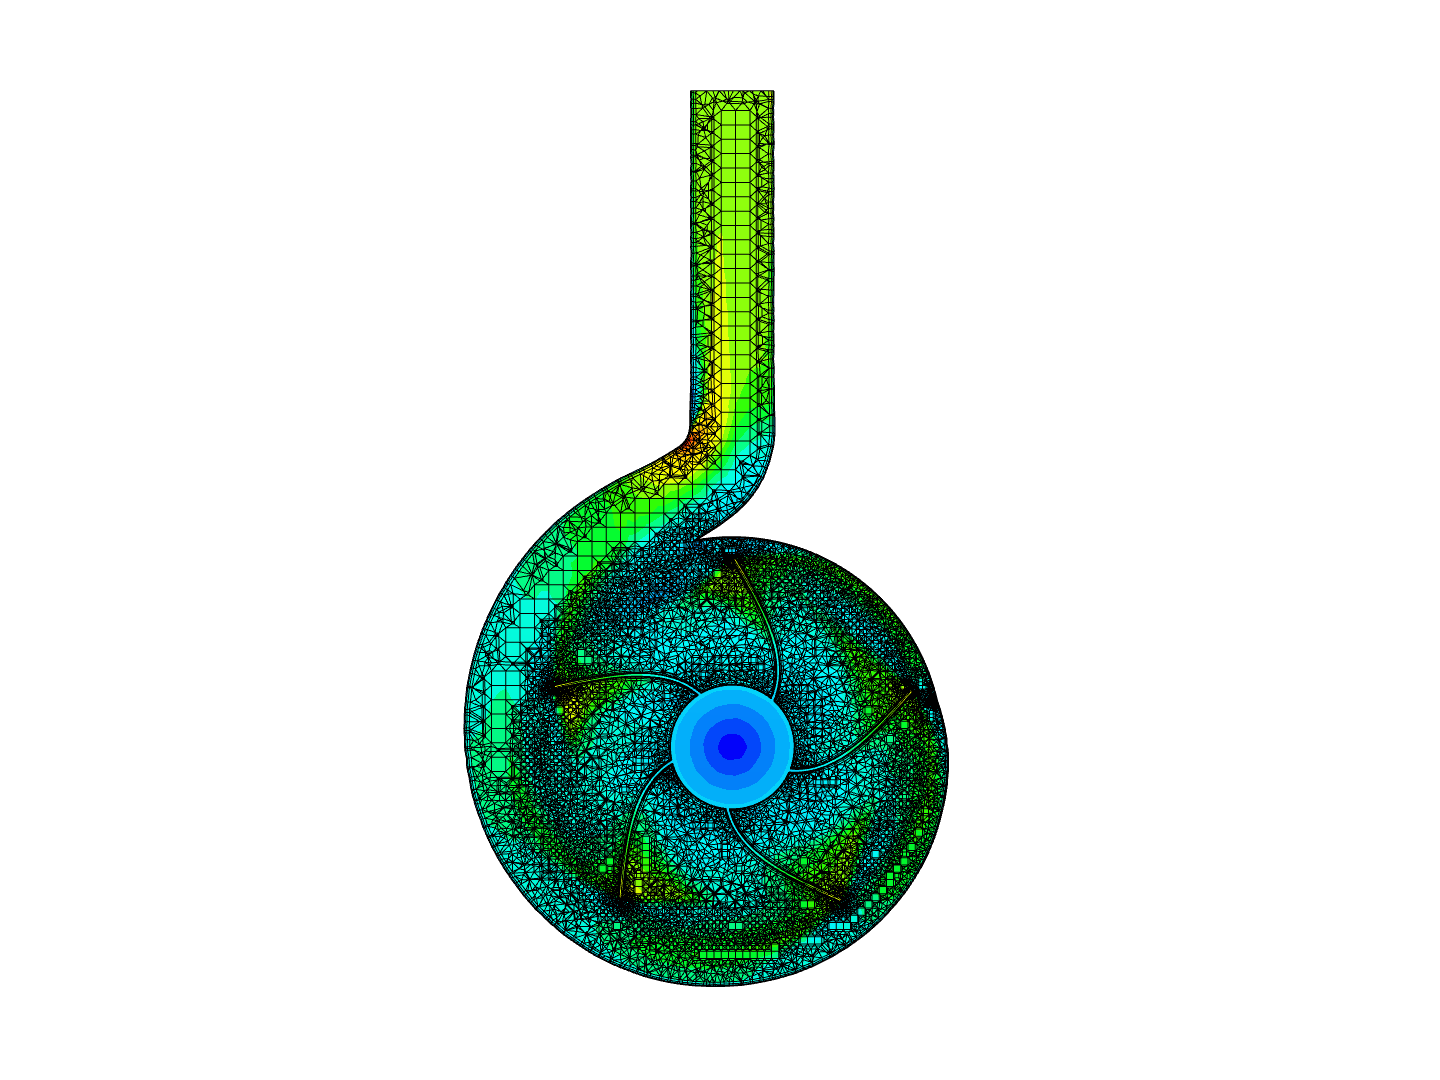 pump simulation image